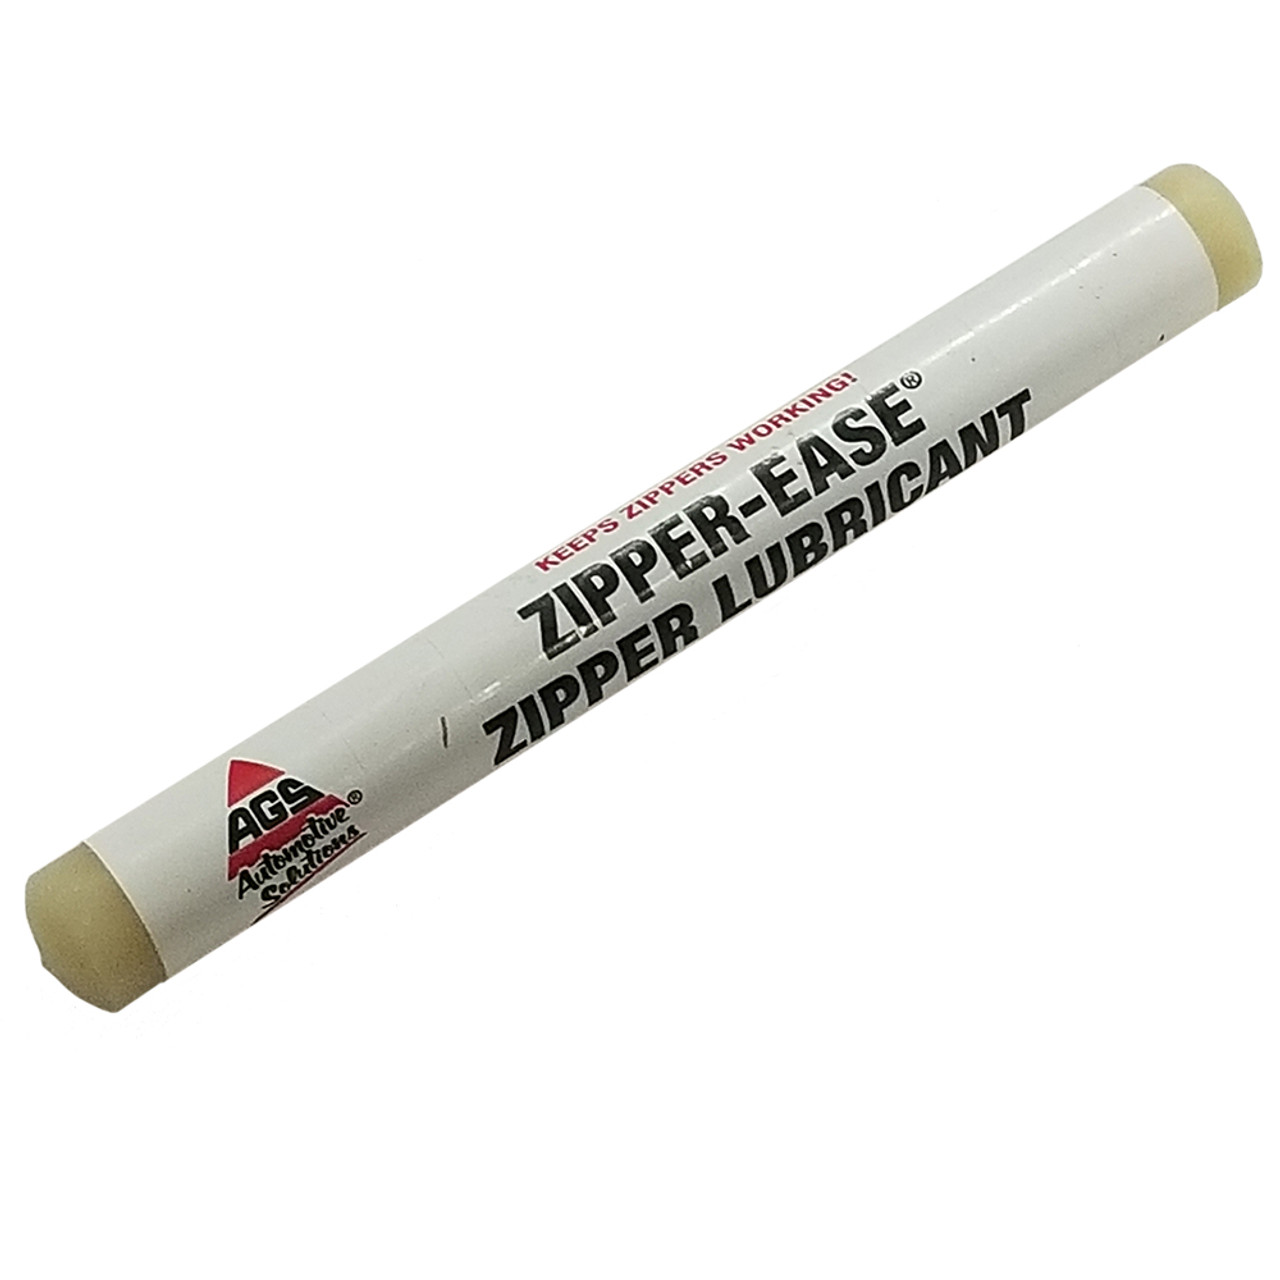 ZIPPER-EASE Pencil Type Zipper Wax Lubricant